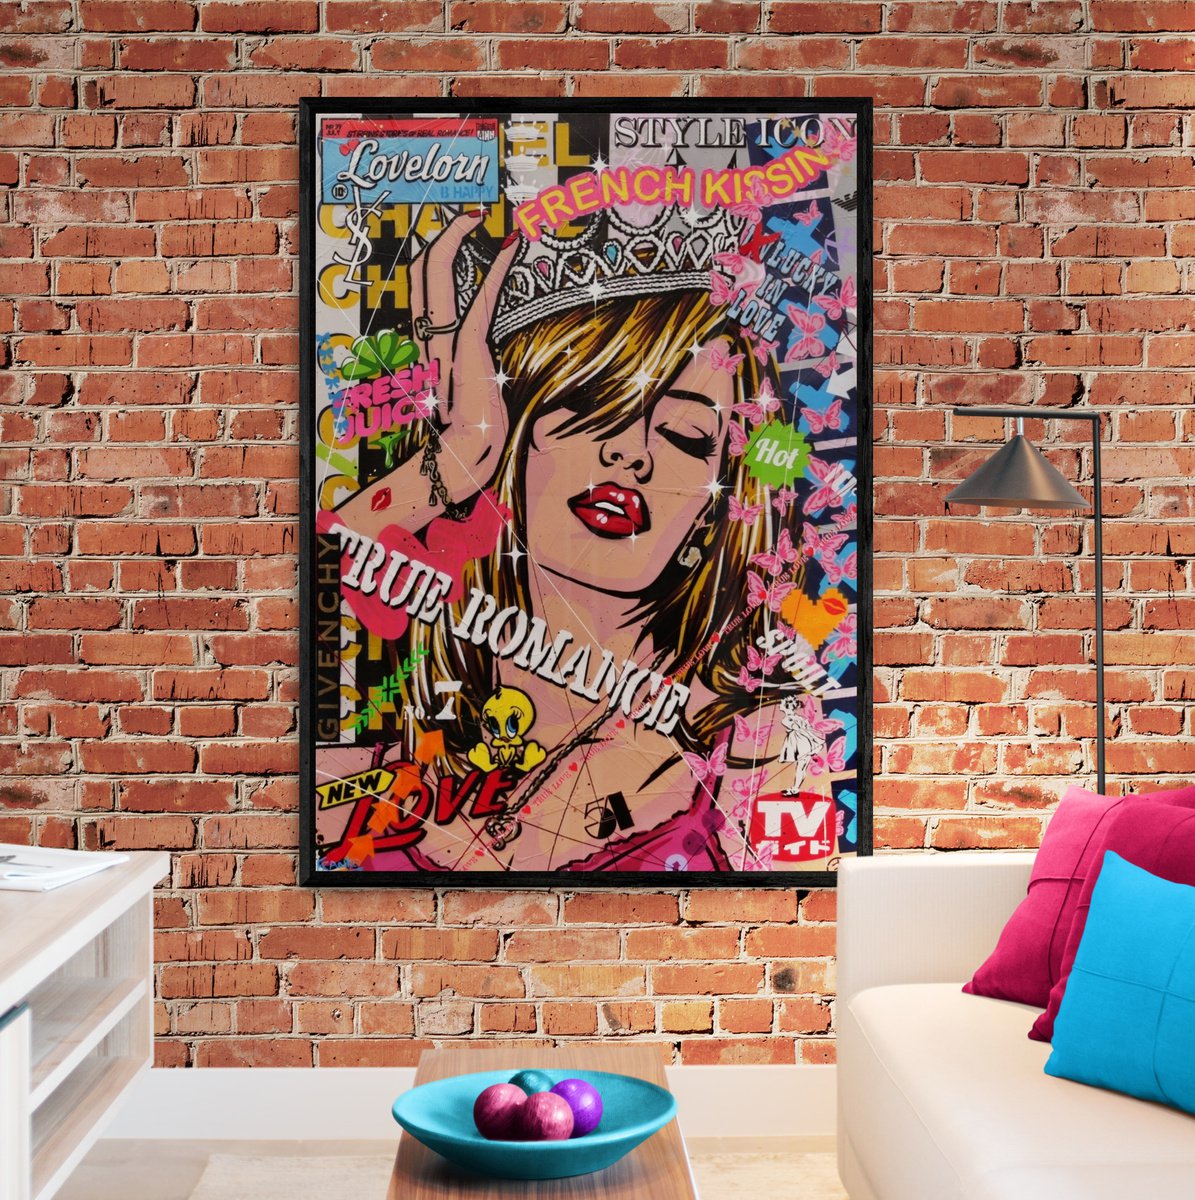 Candy Princess 140cm x 100cm Beauty Queen Textured Urban Pop Art by Franko